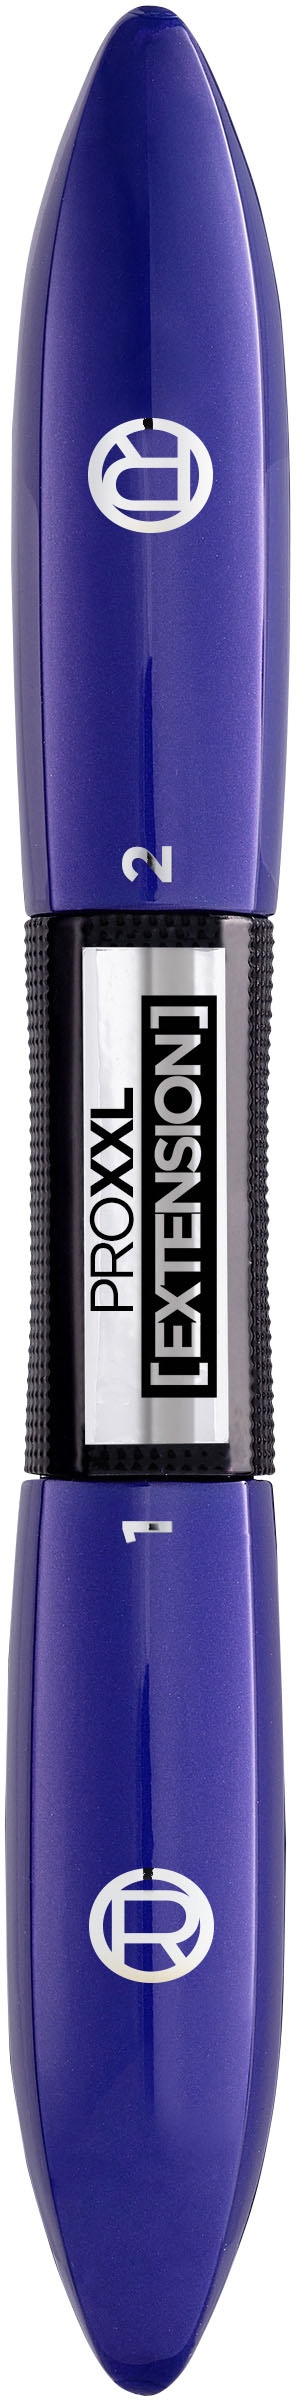 L'ORÉAL PARIS Mascara »ProXXL Extension Mascara schwarz«